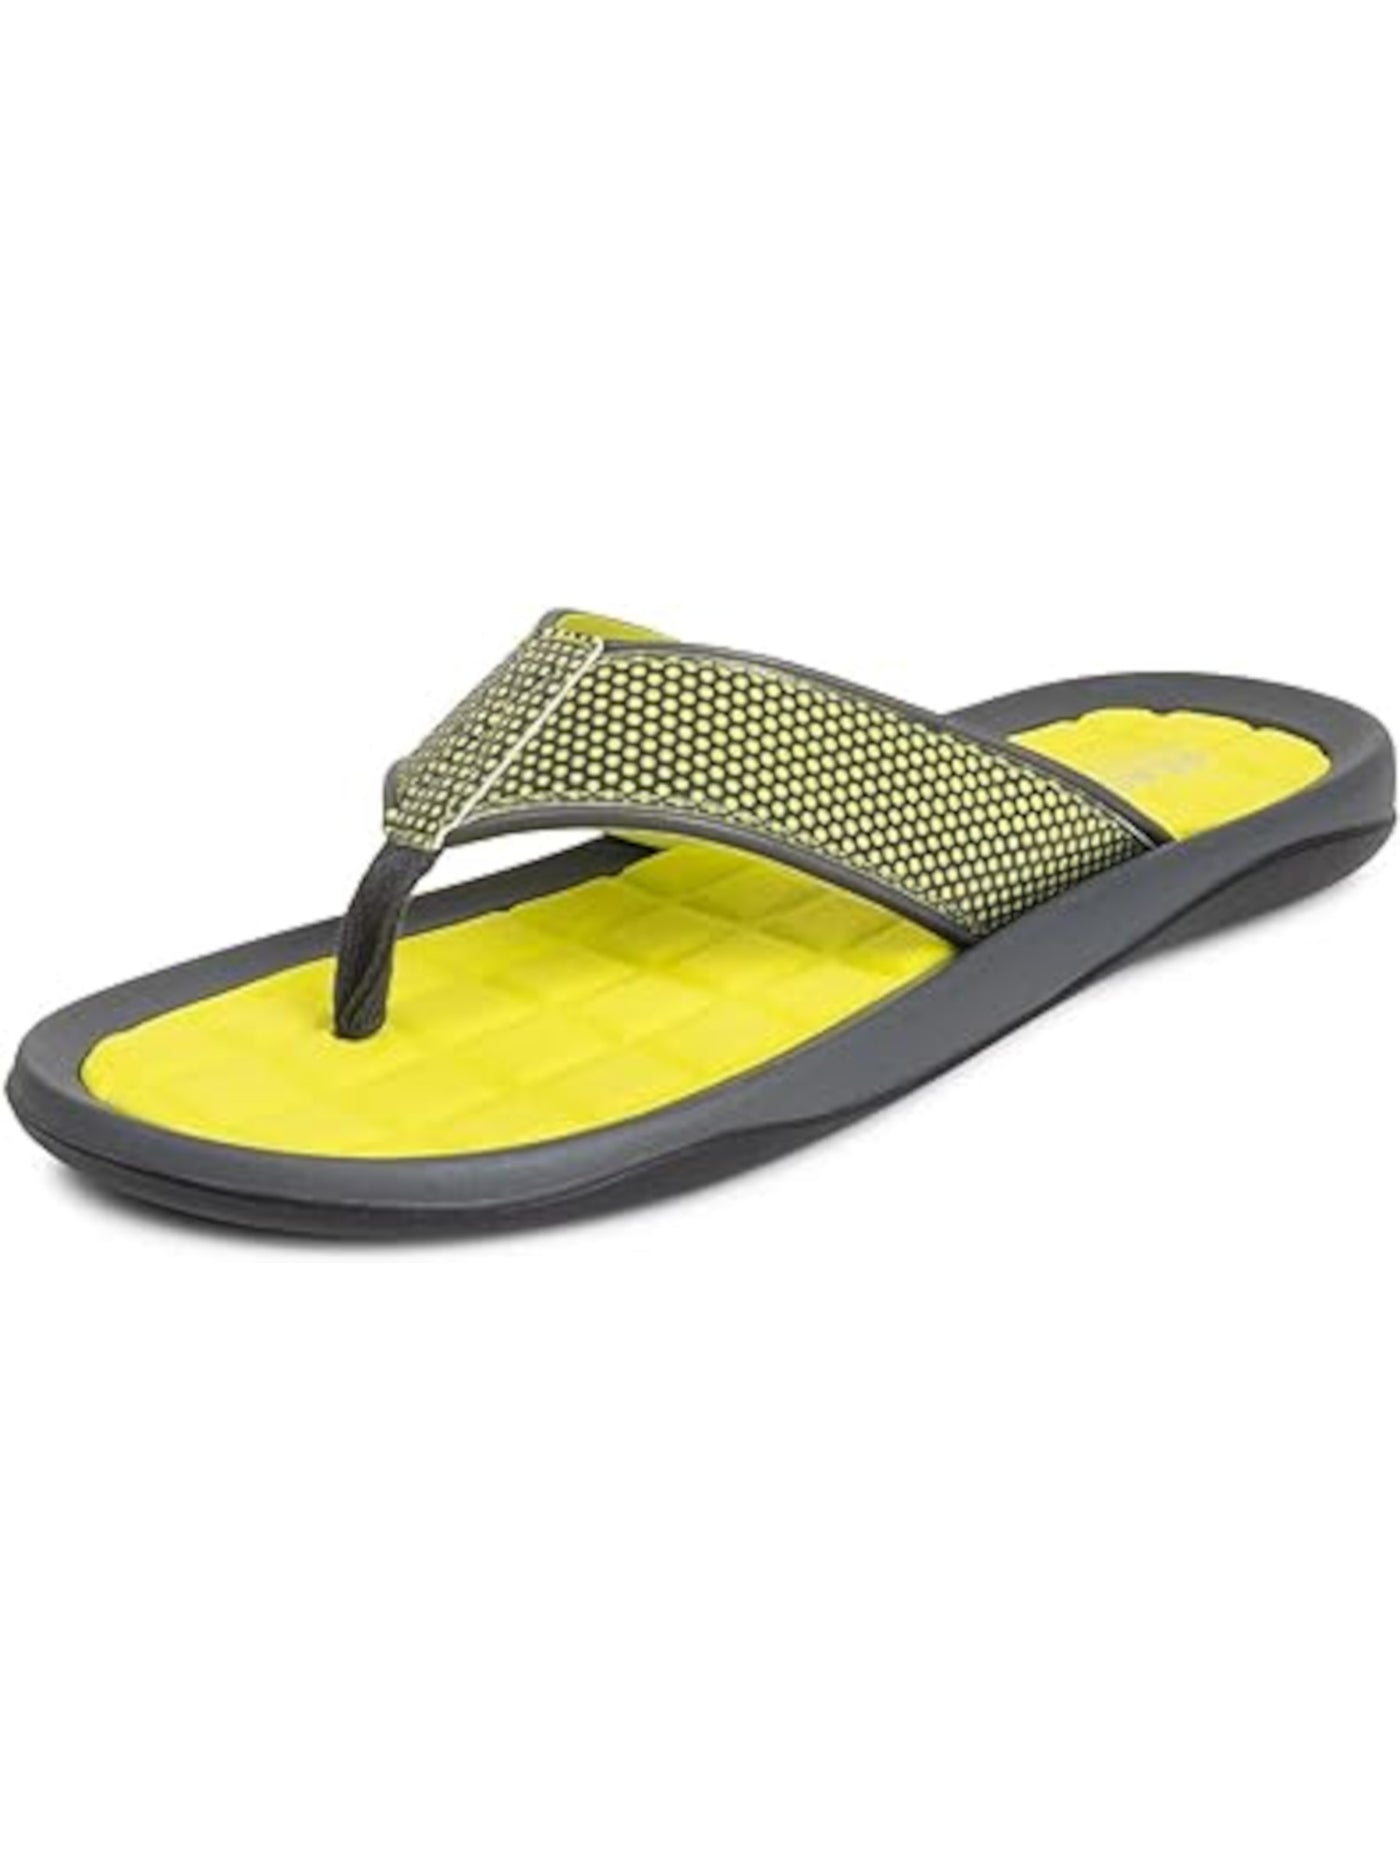 REACTION KENNETH COLE Mens Green Polka Dot Lightweight Comfort Four Sandal C Round Toe Slide Thong Sandals Shoes 7 M